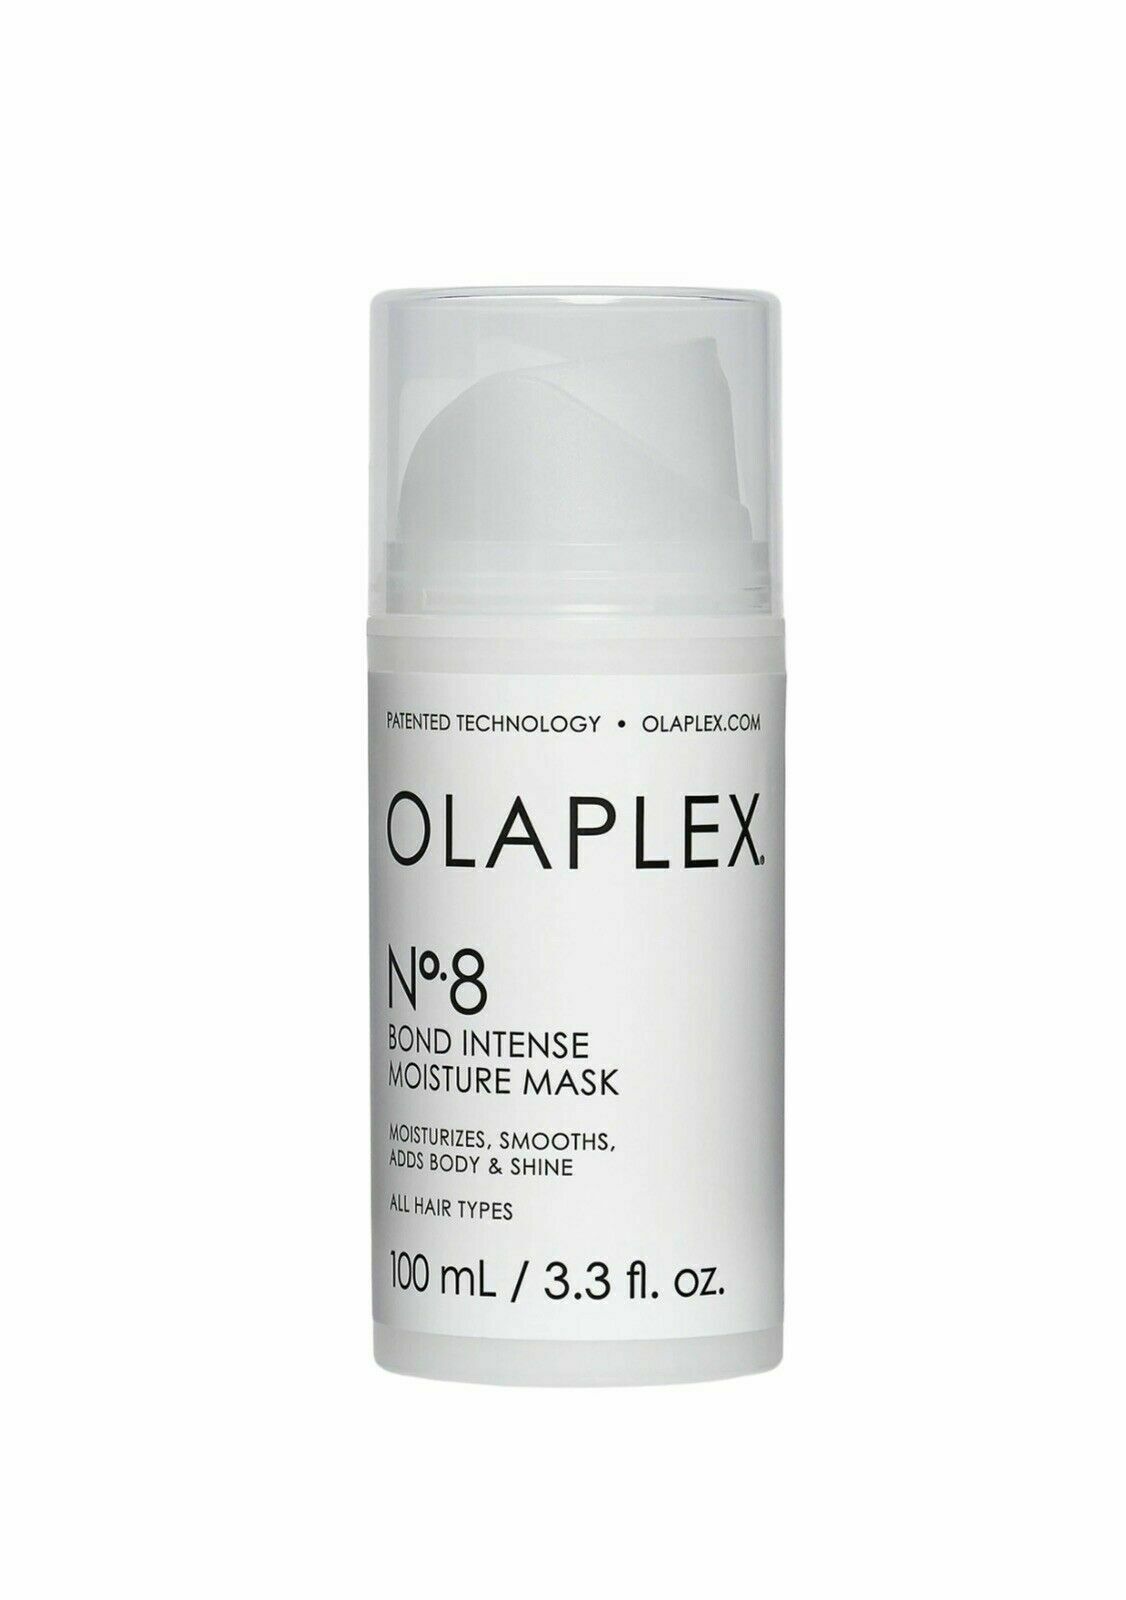 Olaplex No. 8 Bond Intense Moisture Mask 3.3 Oz shipping on April 8